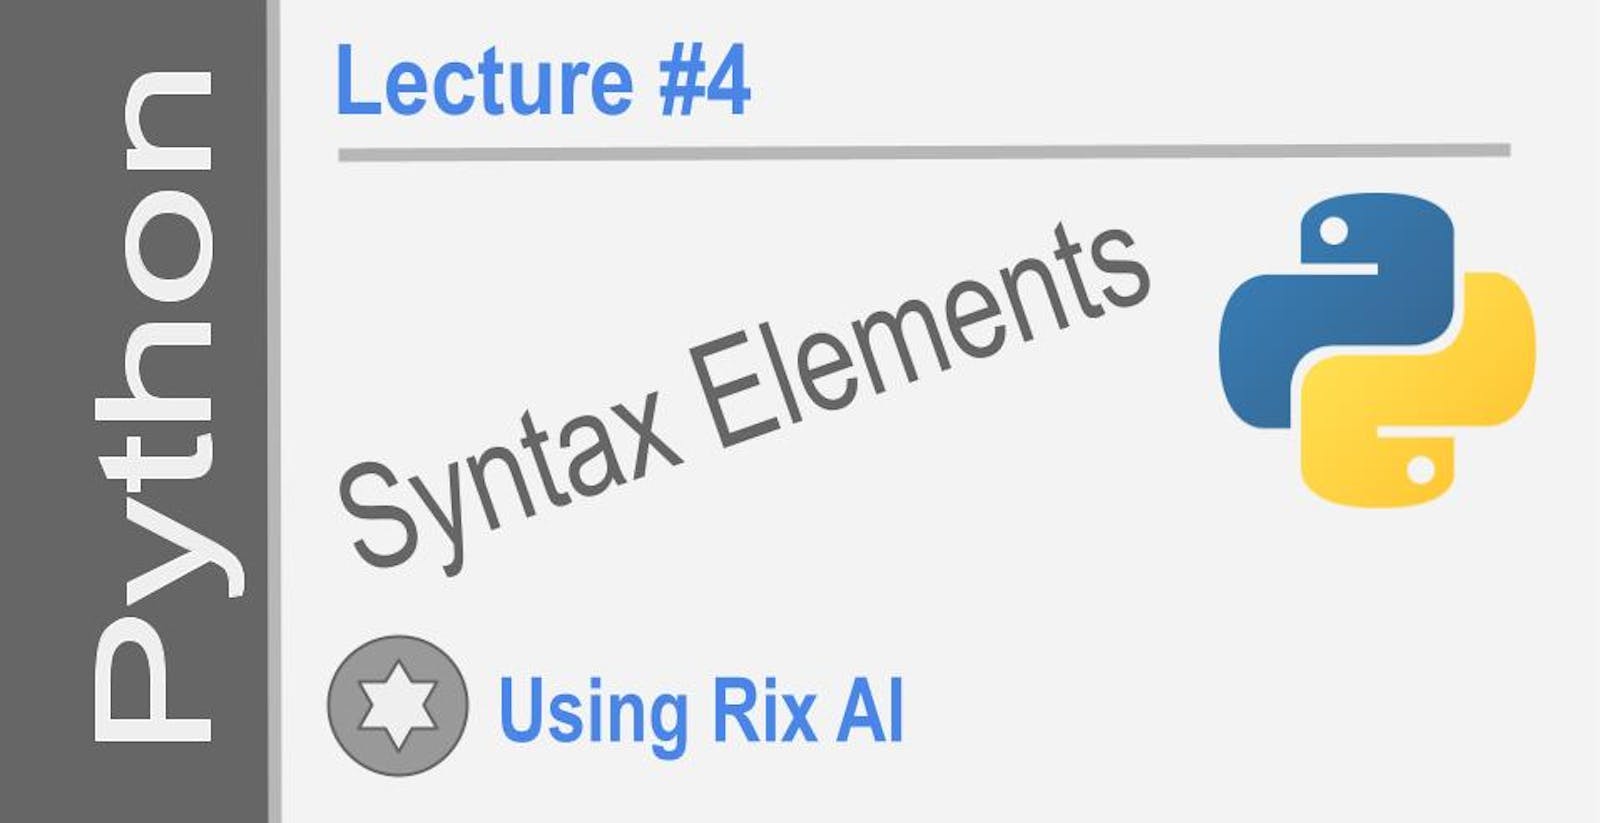 Syntax Elements